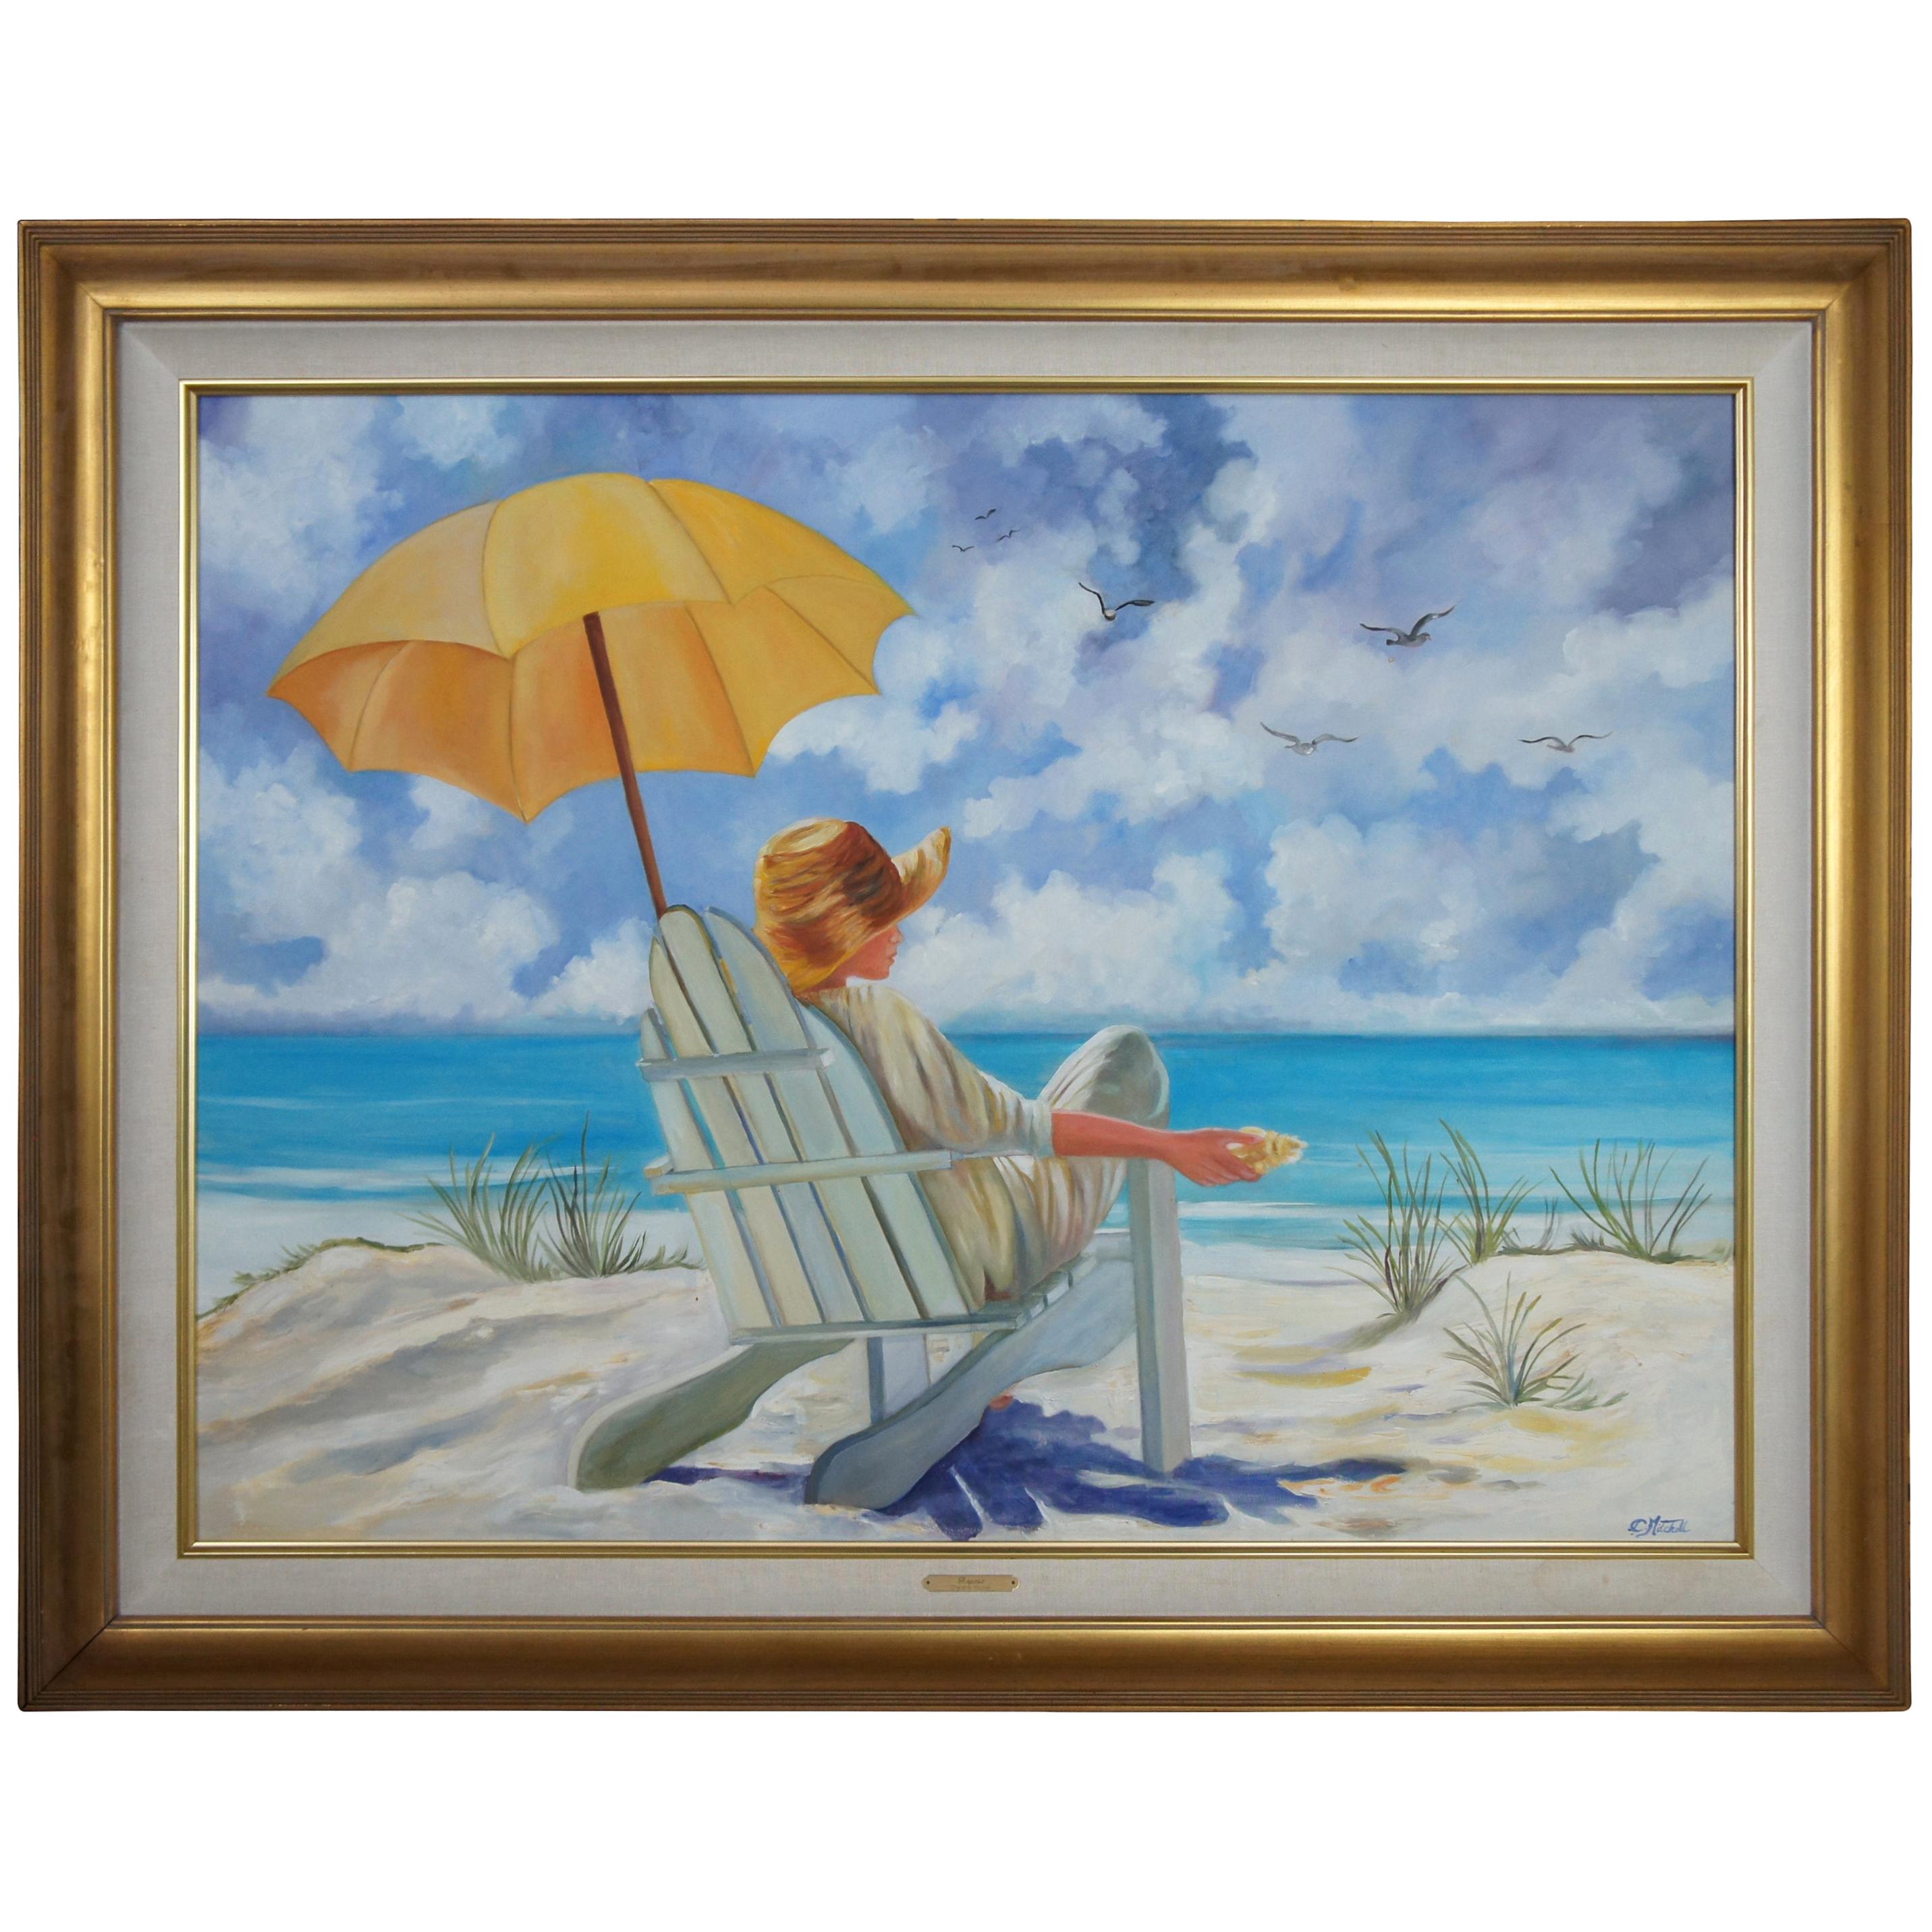 Charlene Mitchell "Repose" Beach Ocean Portrait Landscape Oil Painting